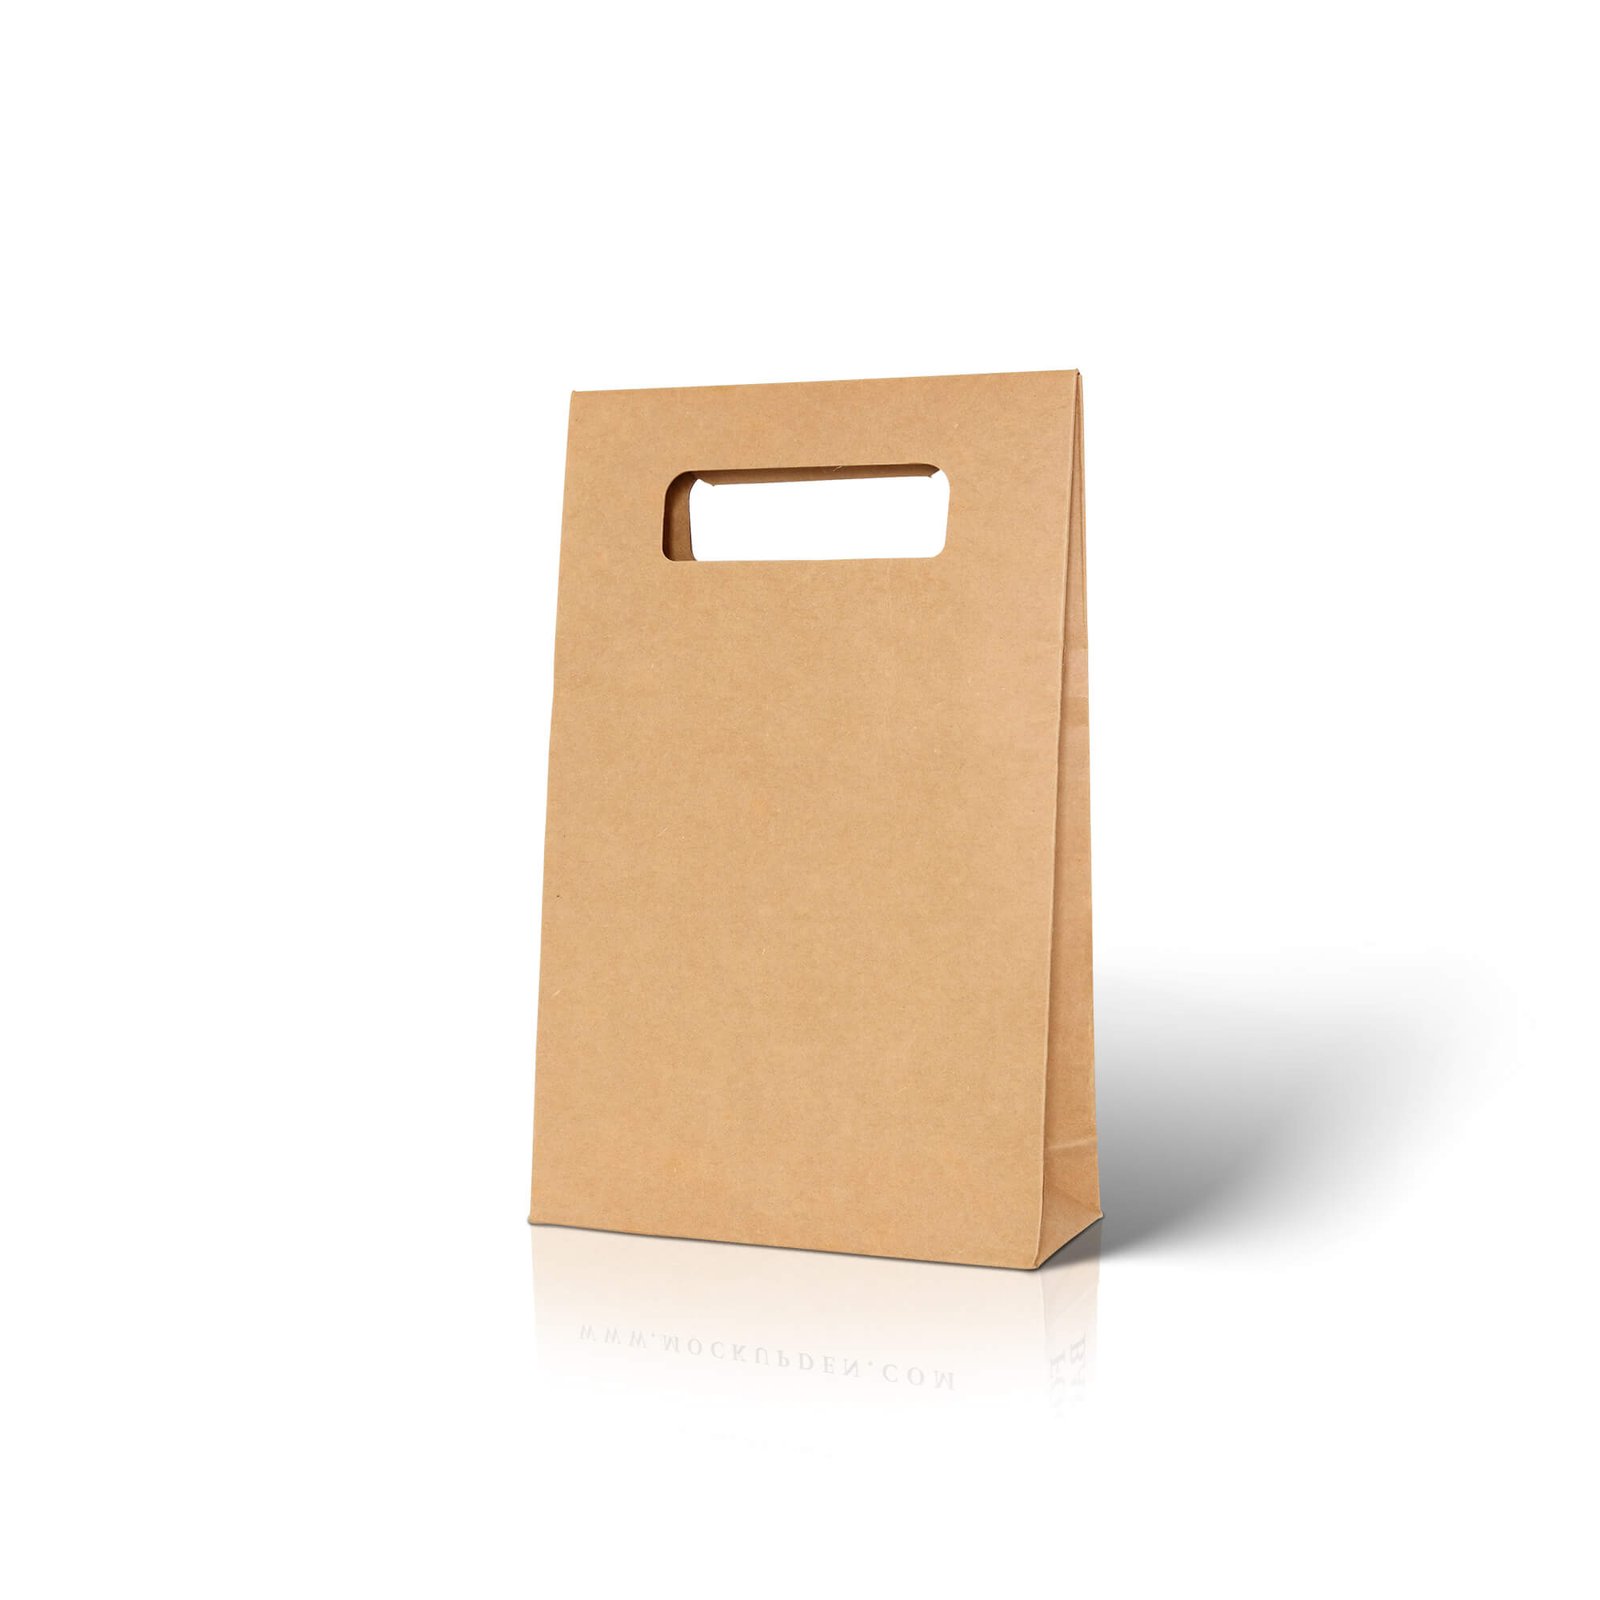 Blank Free Food Carry Bag Mockup PSD Template